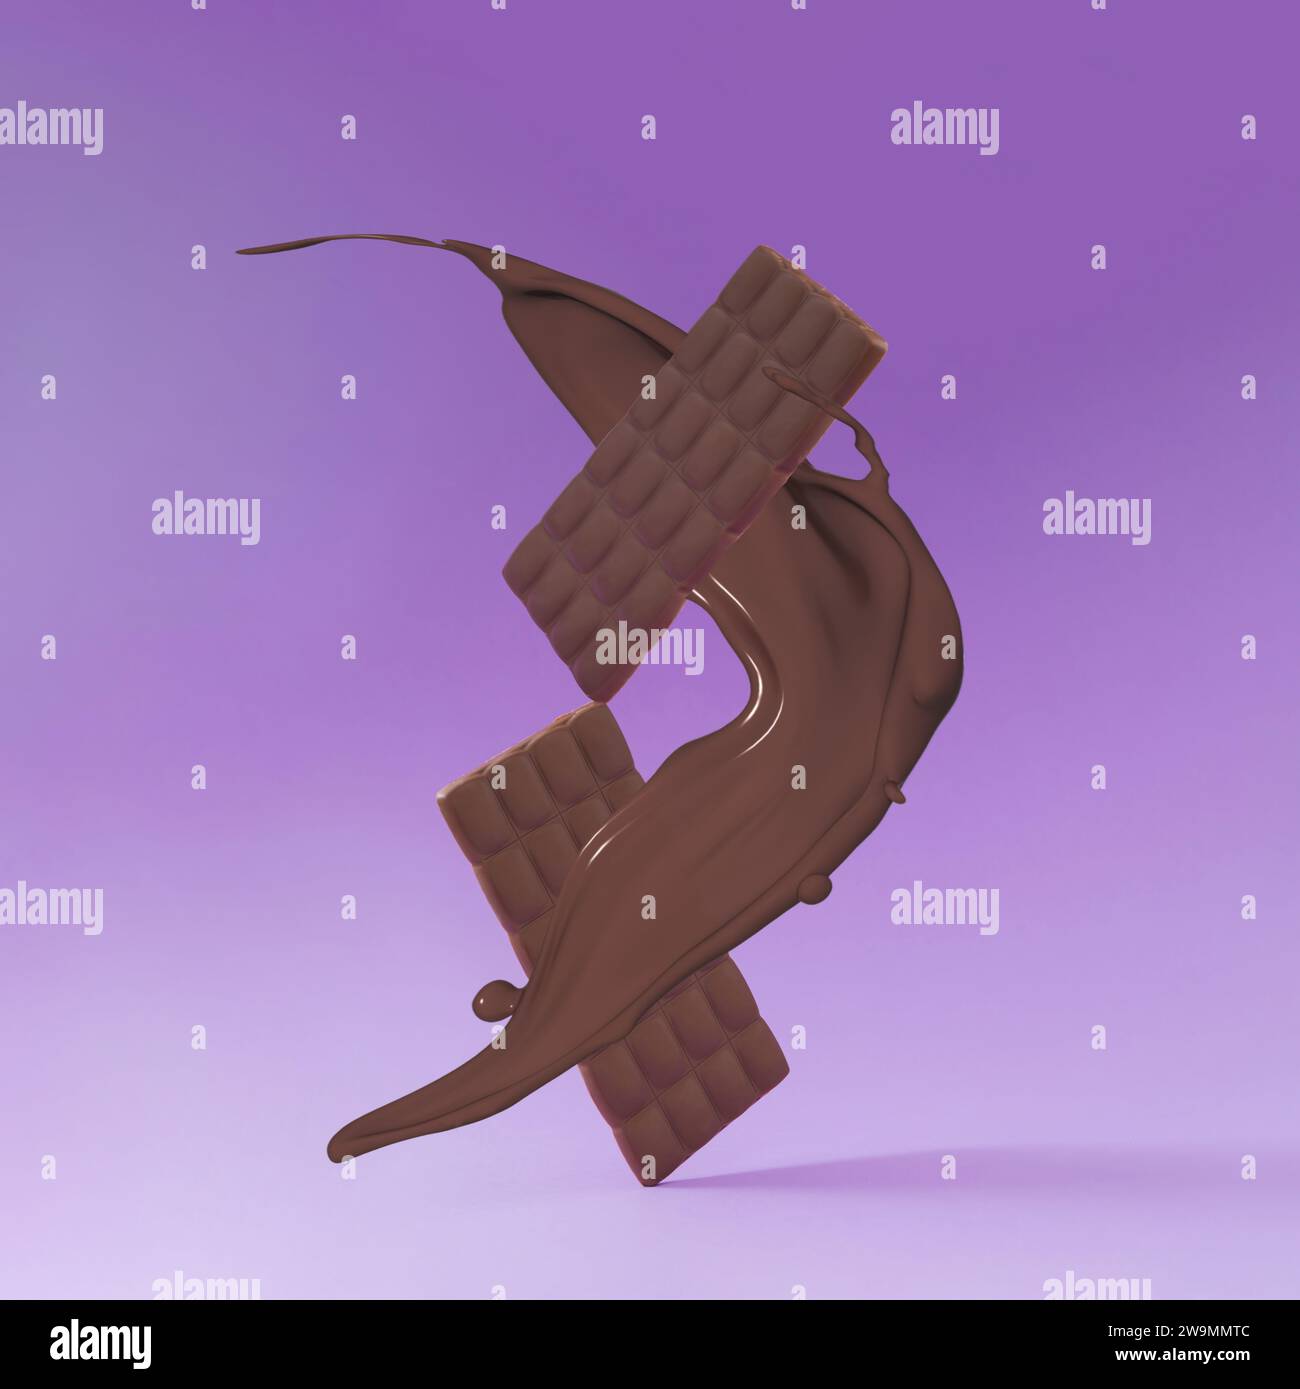 Creative layout made with delicious chocolates and chocolate milk splash on light purple background. Minimal concept. Yummy chocolate bars idea. Stock Photo